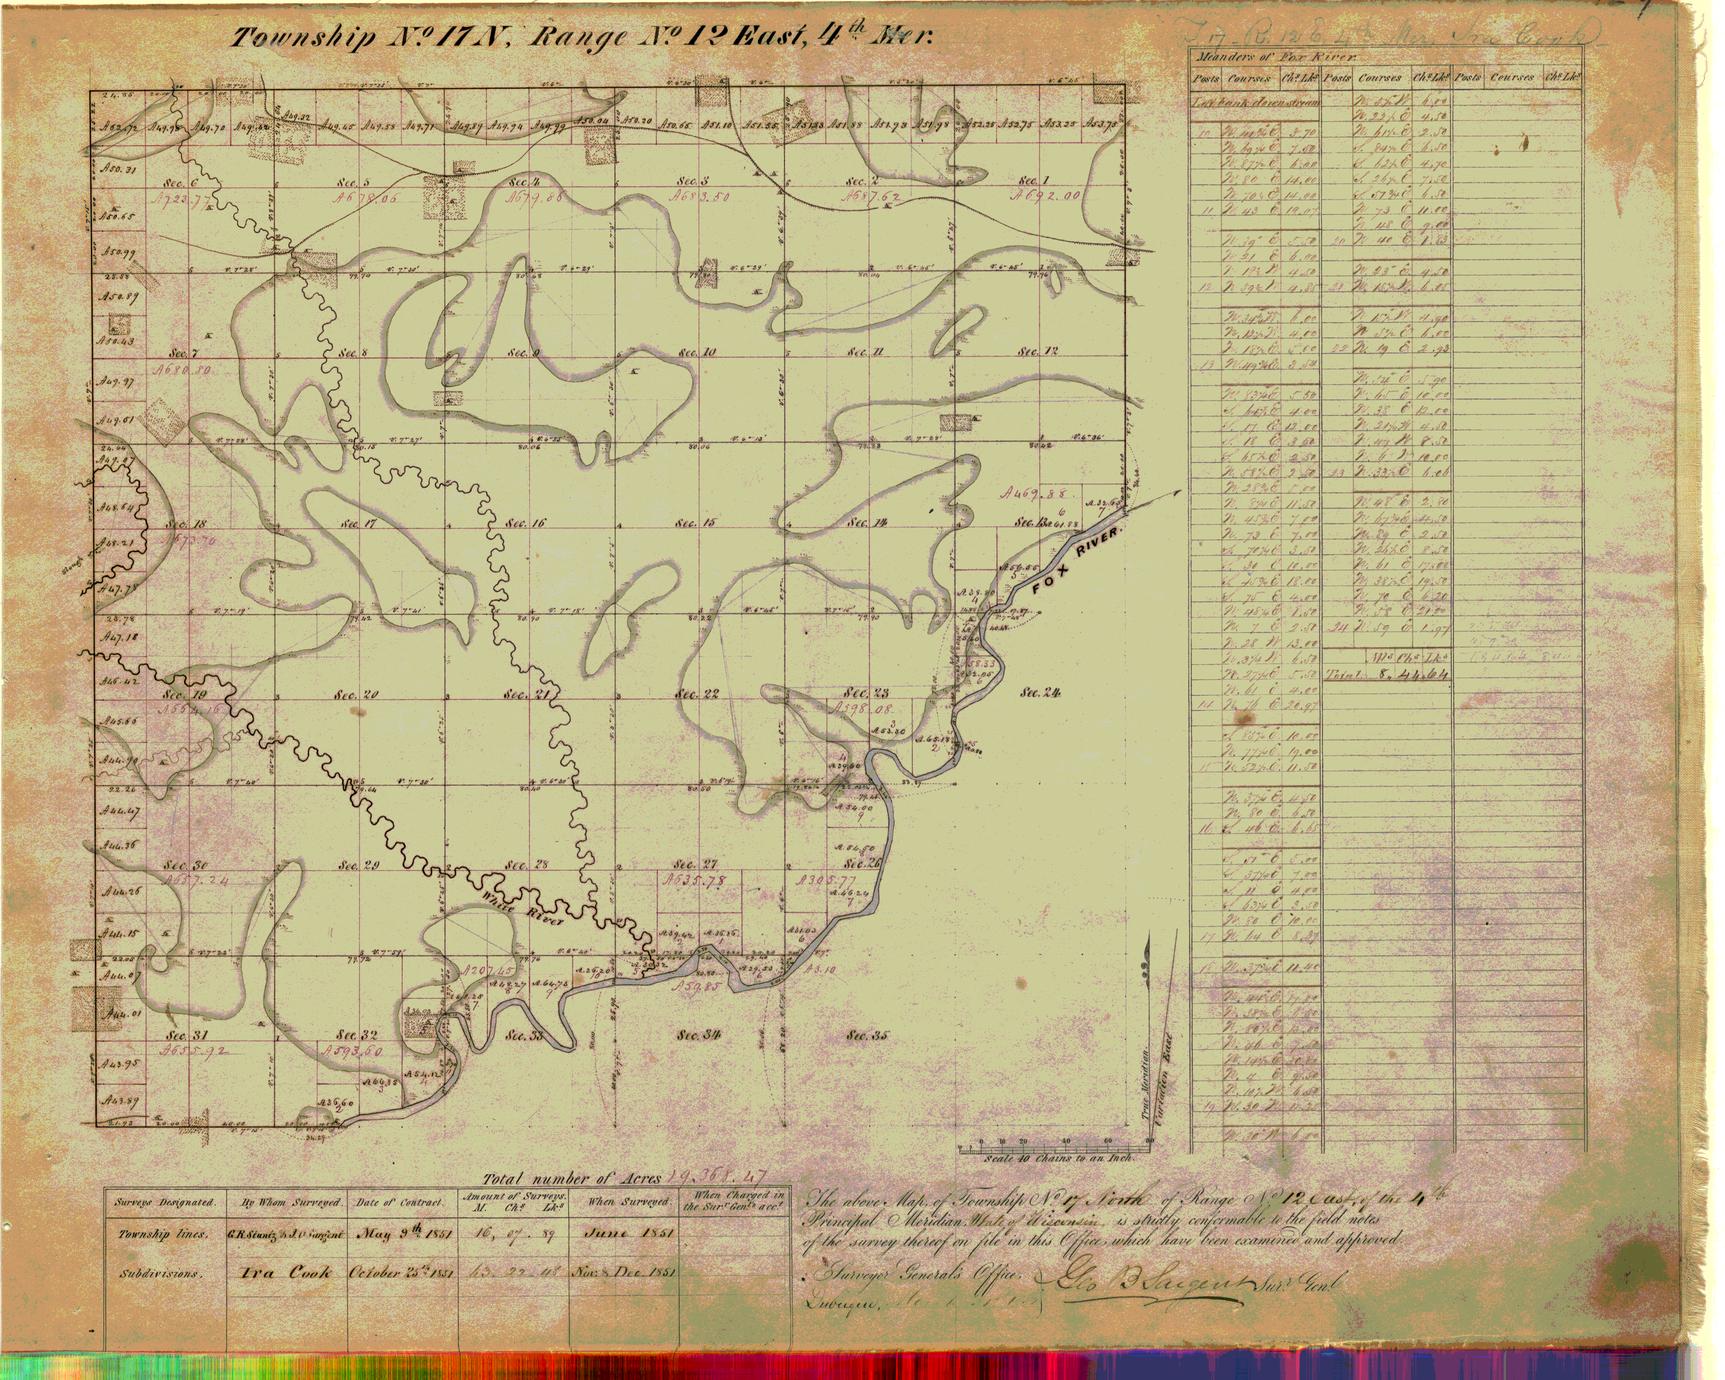 [Public Land Survey System map: Wisconsin Township 17 North, Range 12 East]